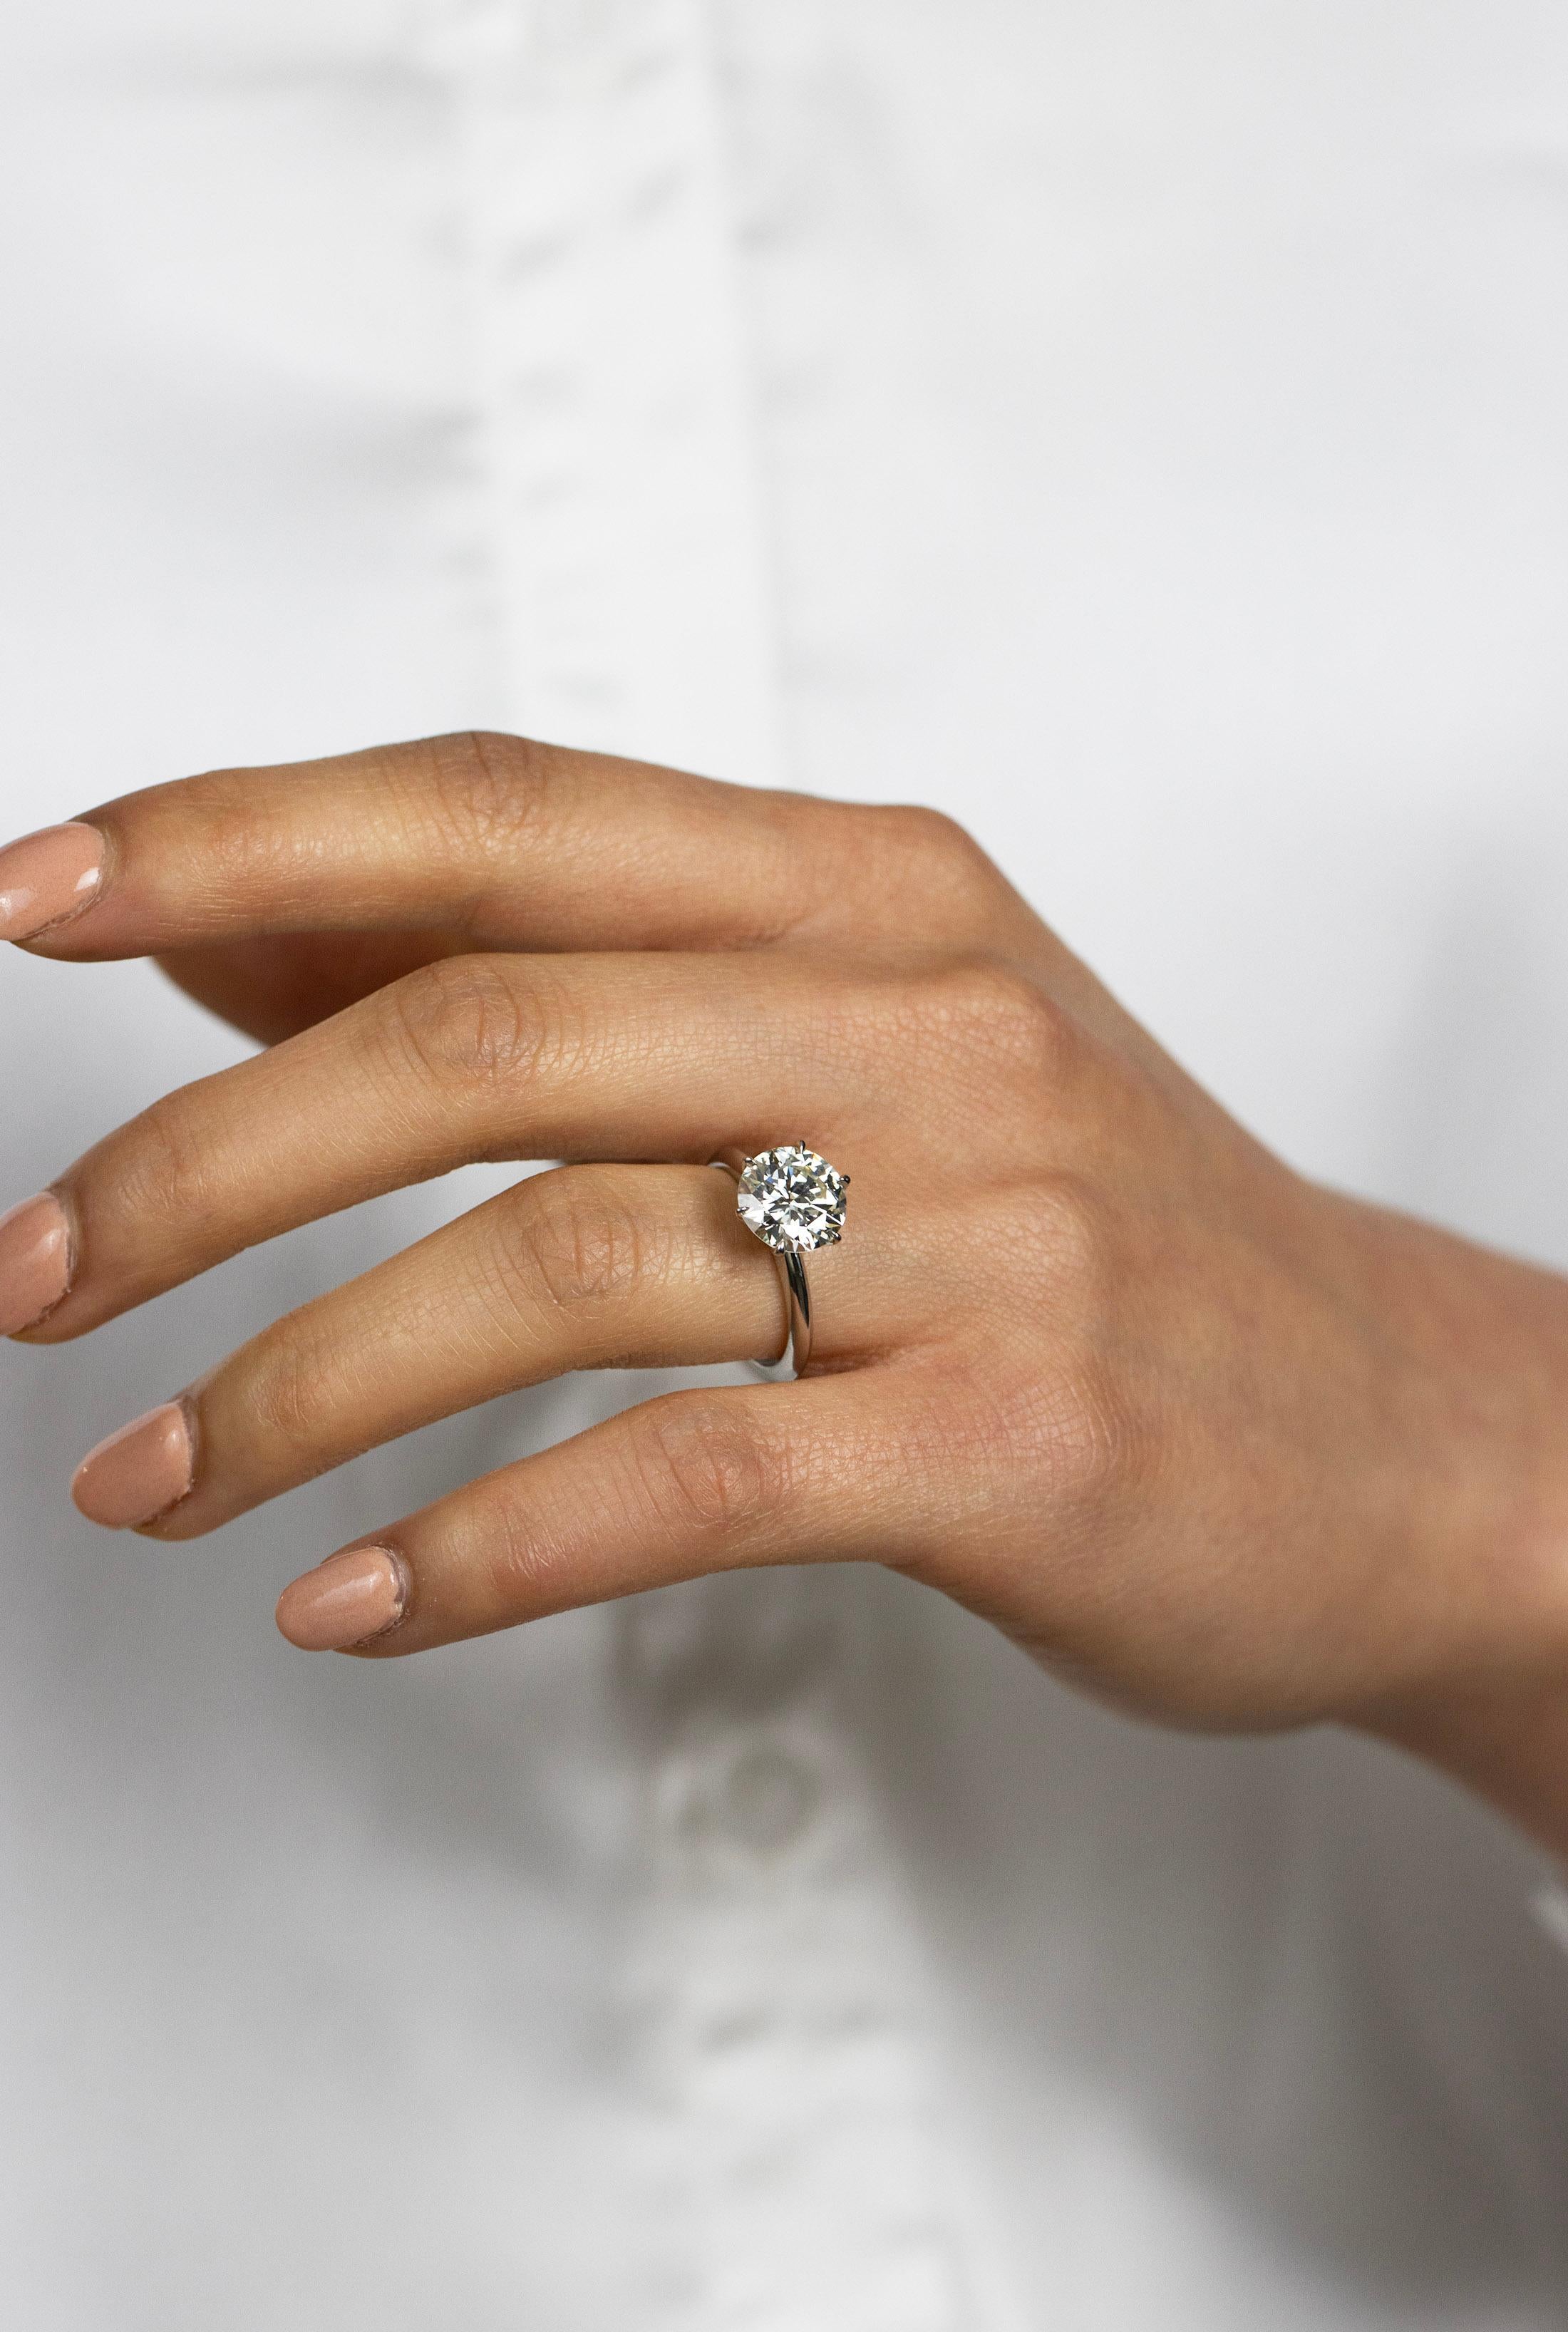 Anillo de compromiso solitario con diamante de talla brillante redondo certificado por GIA de 2.51 quilates Contemporáneo en venta